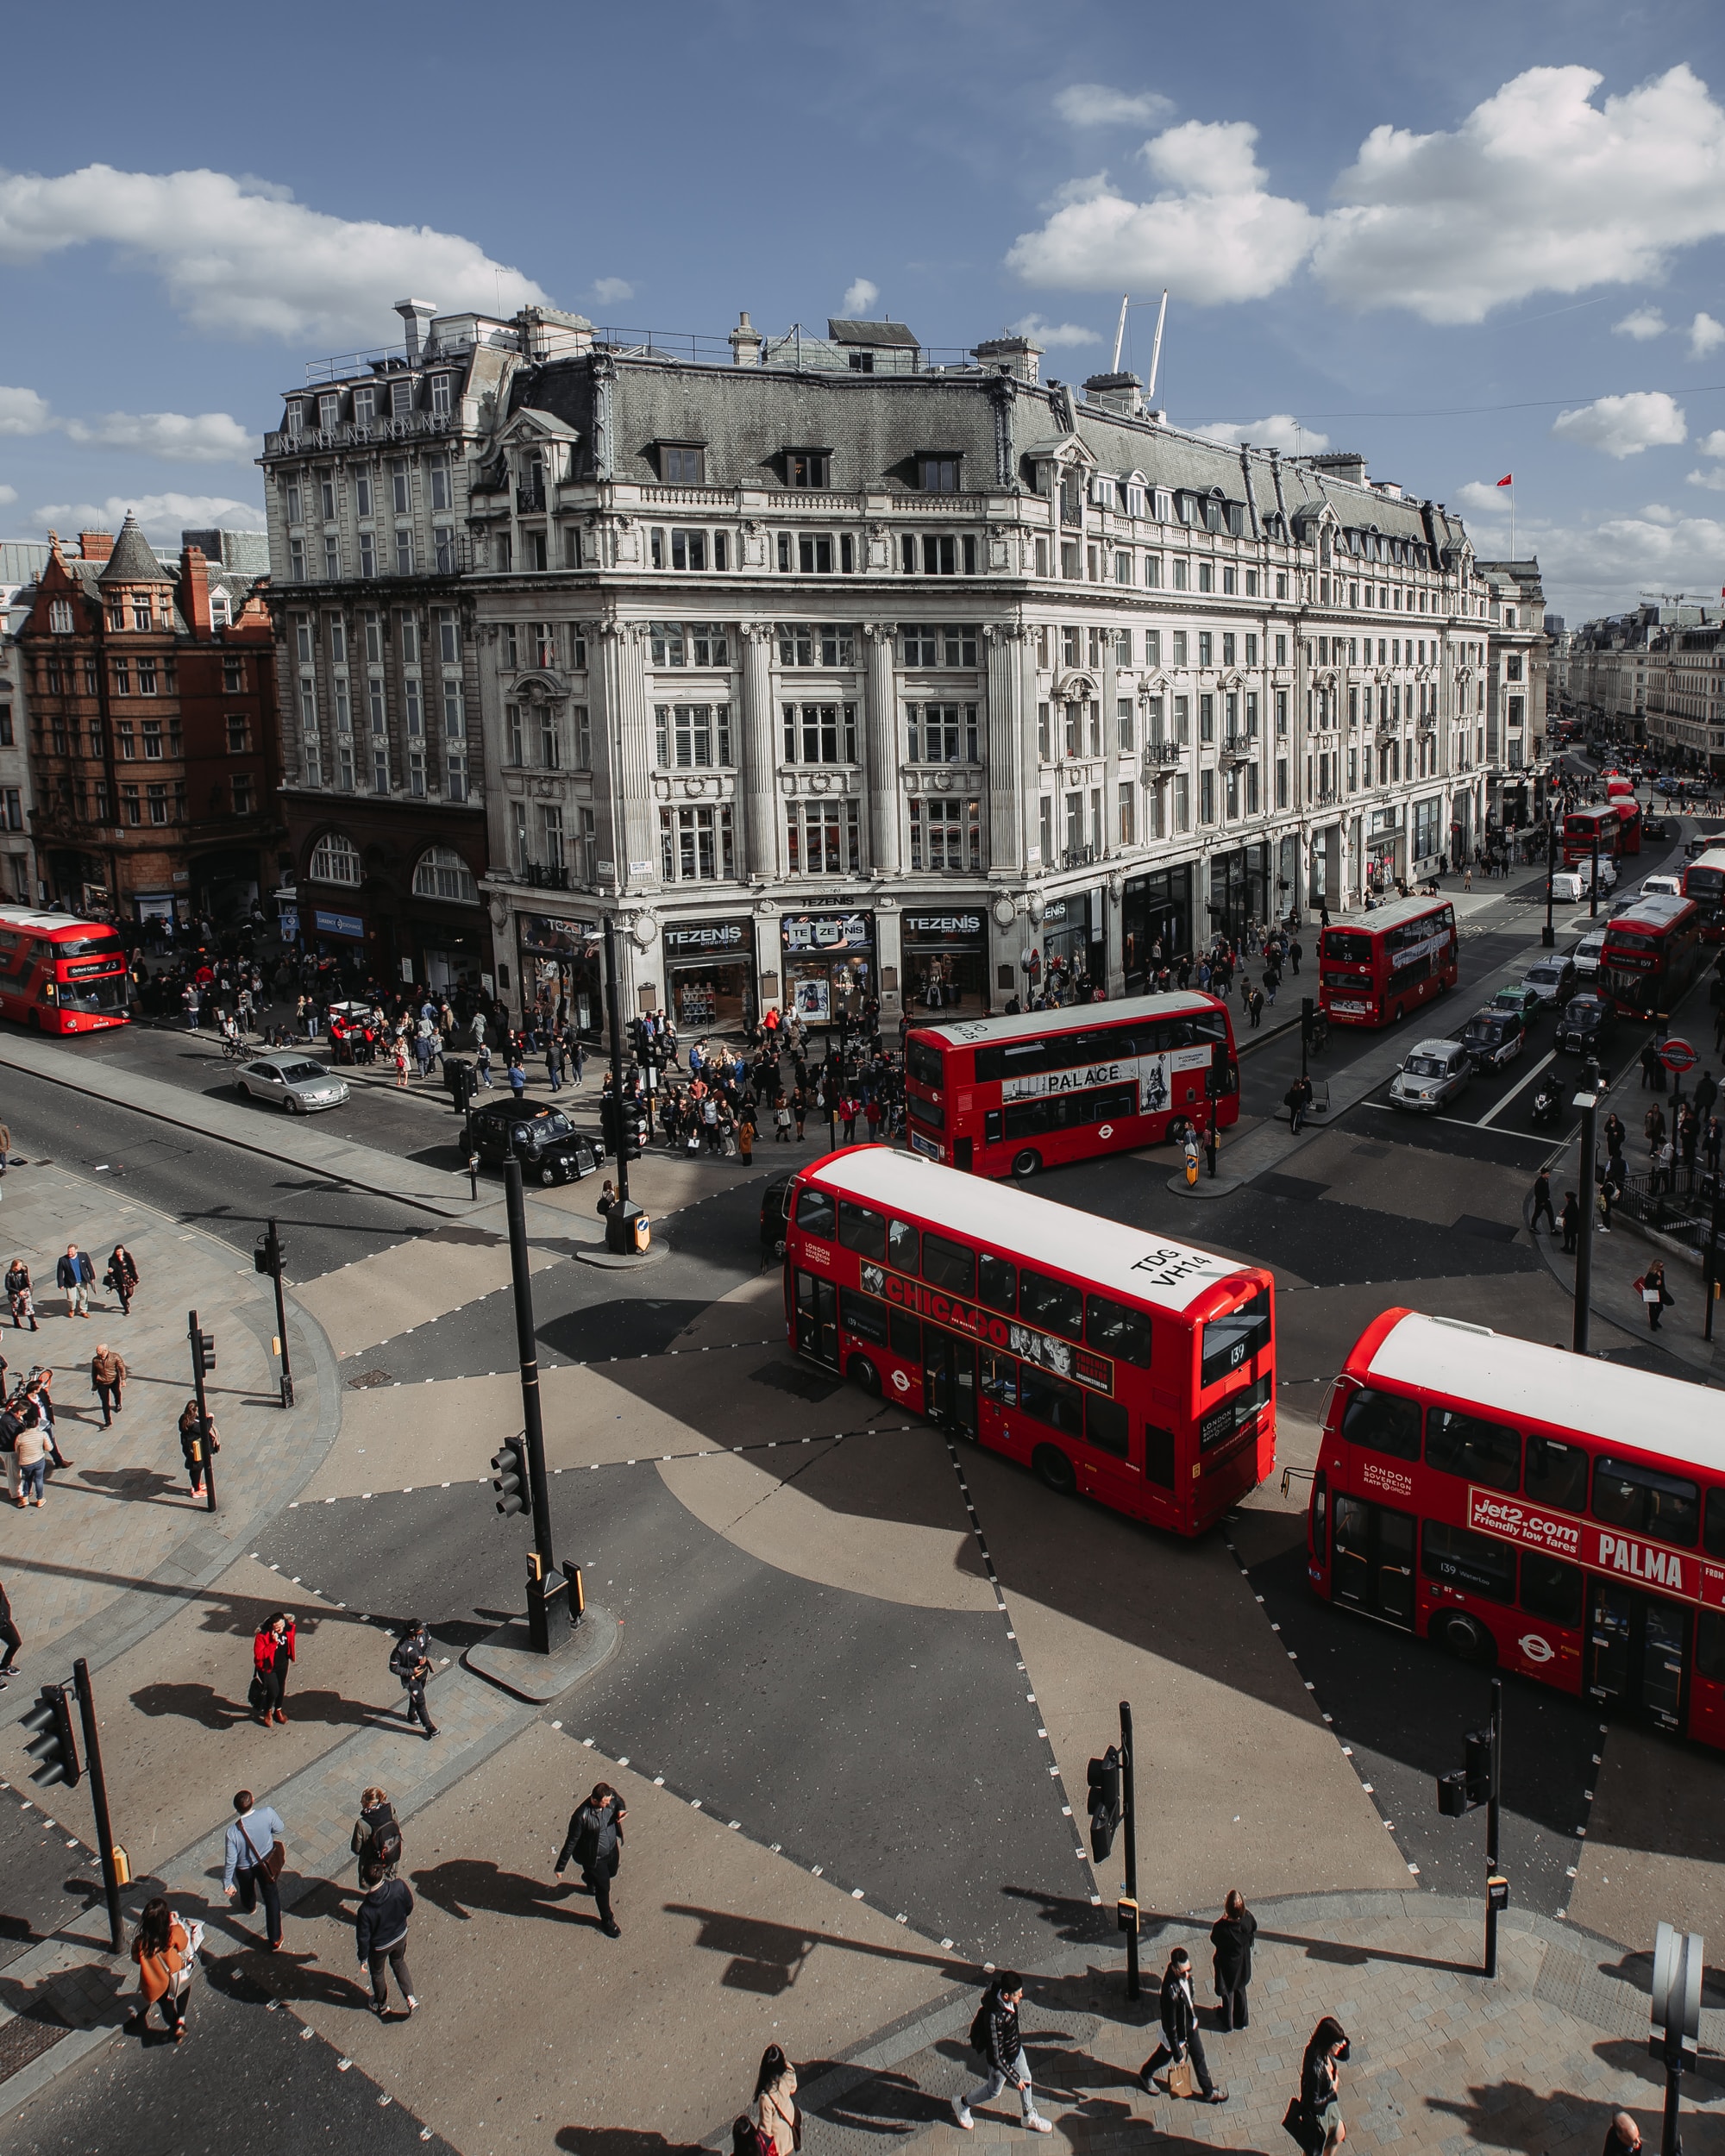 Classic view of London - Oxford Street - London Bucket List